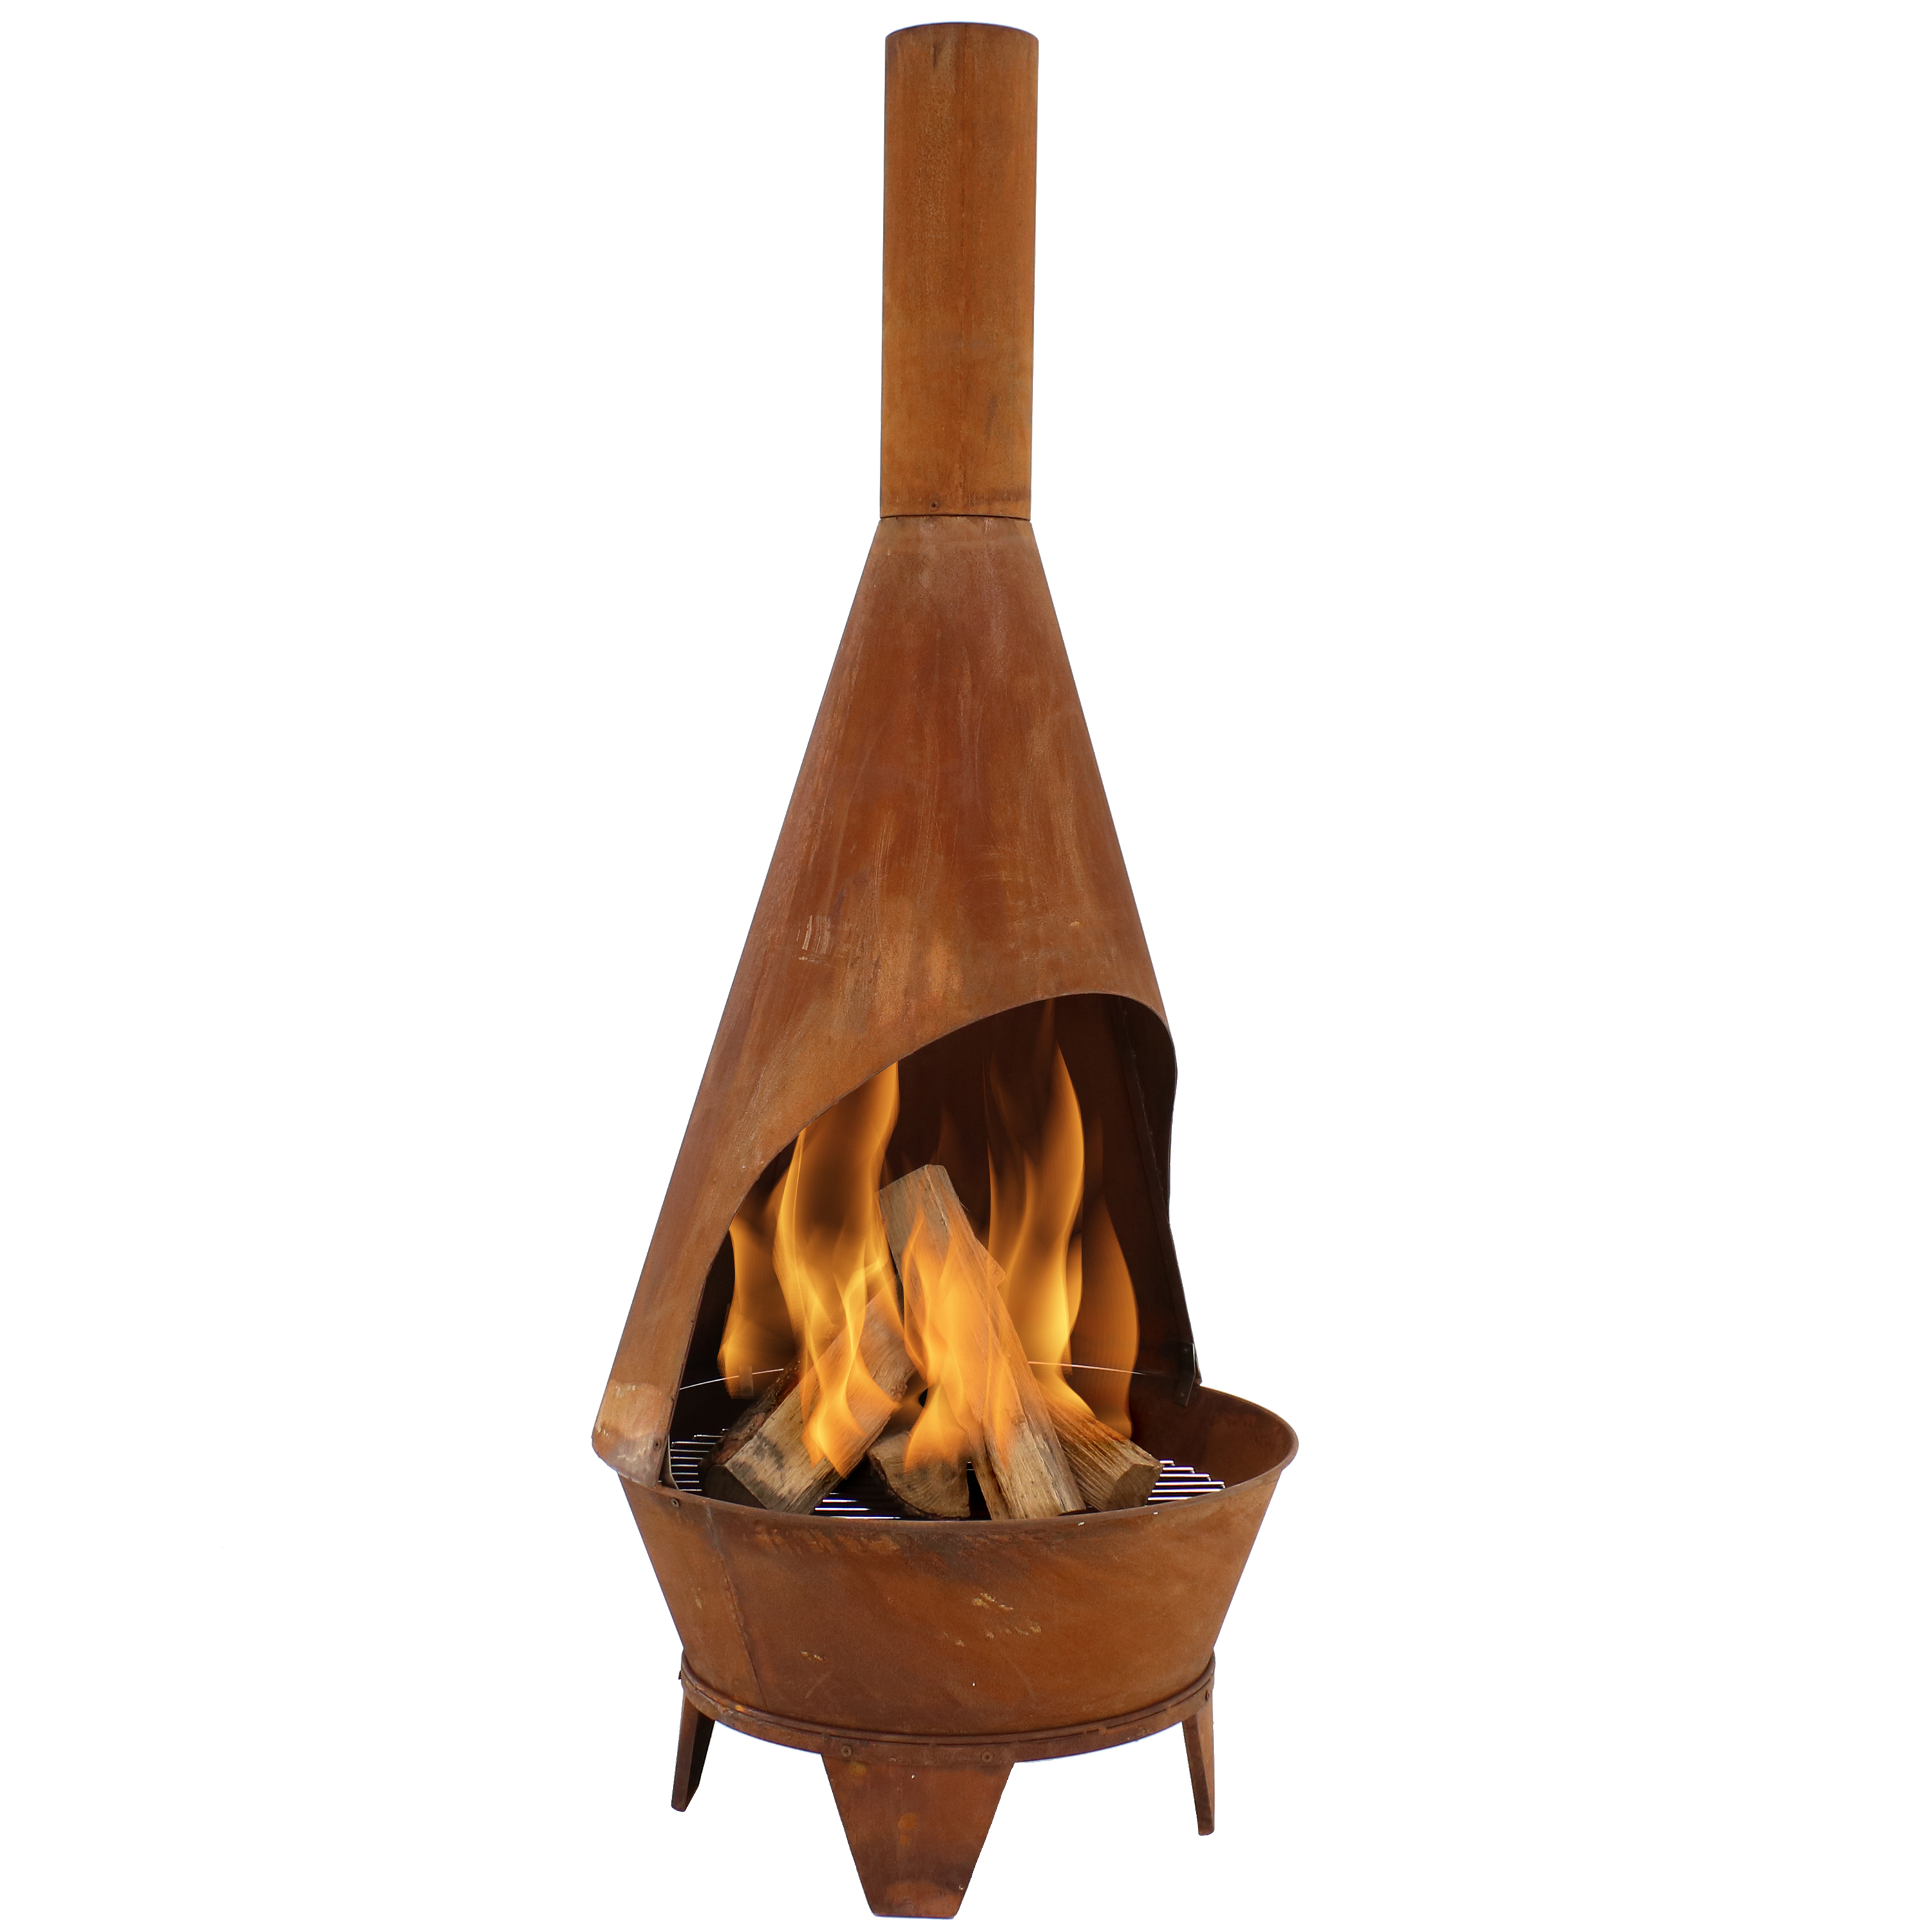 Sunnydaze Rustic Chiminea Wood-Burning Fire Pit - 6-Foot